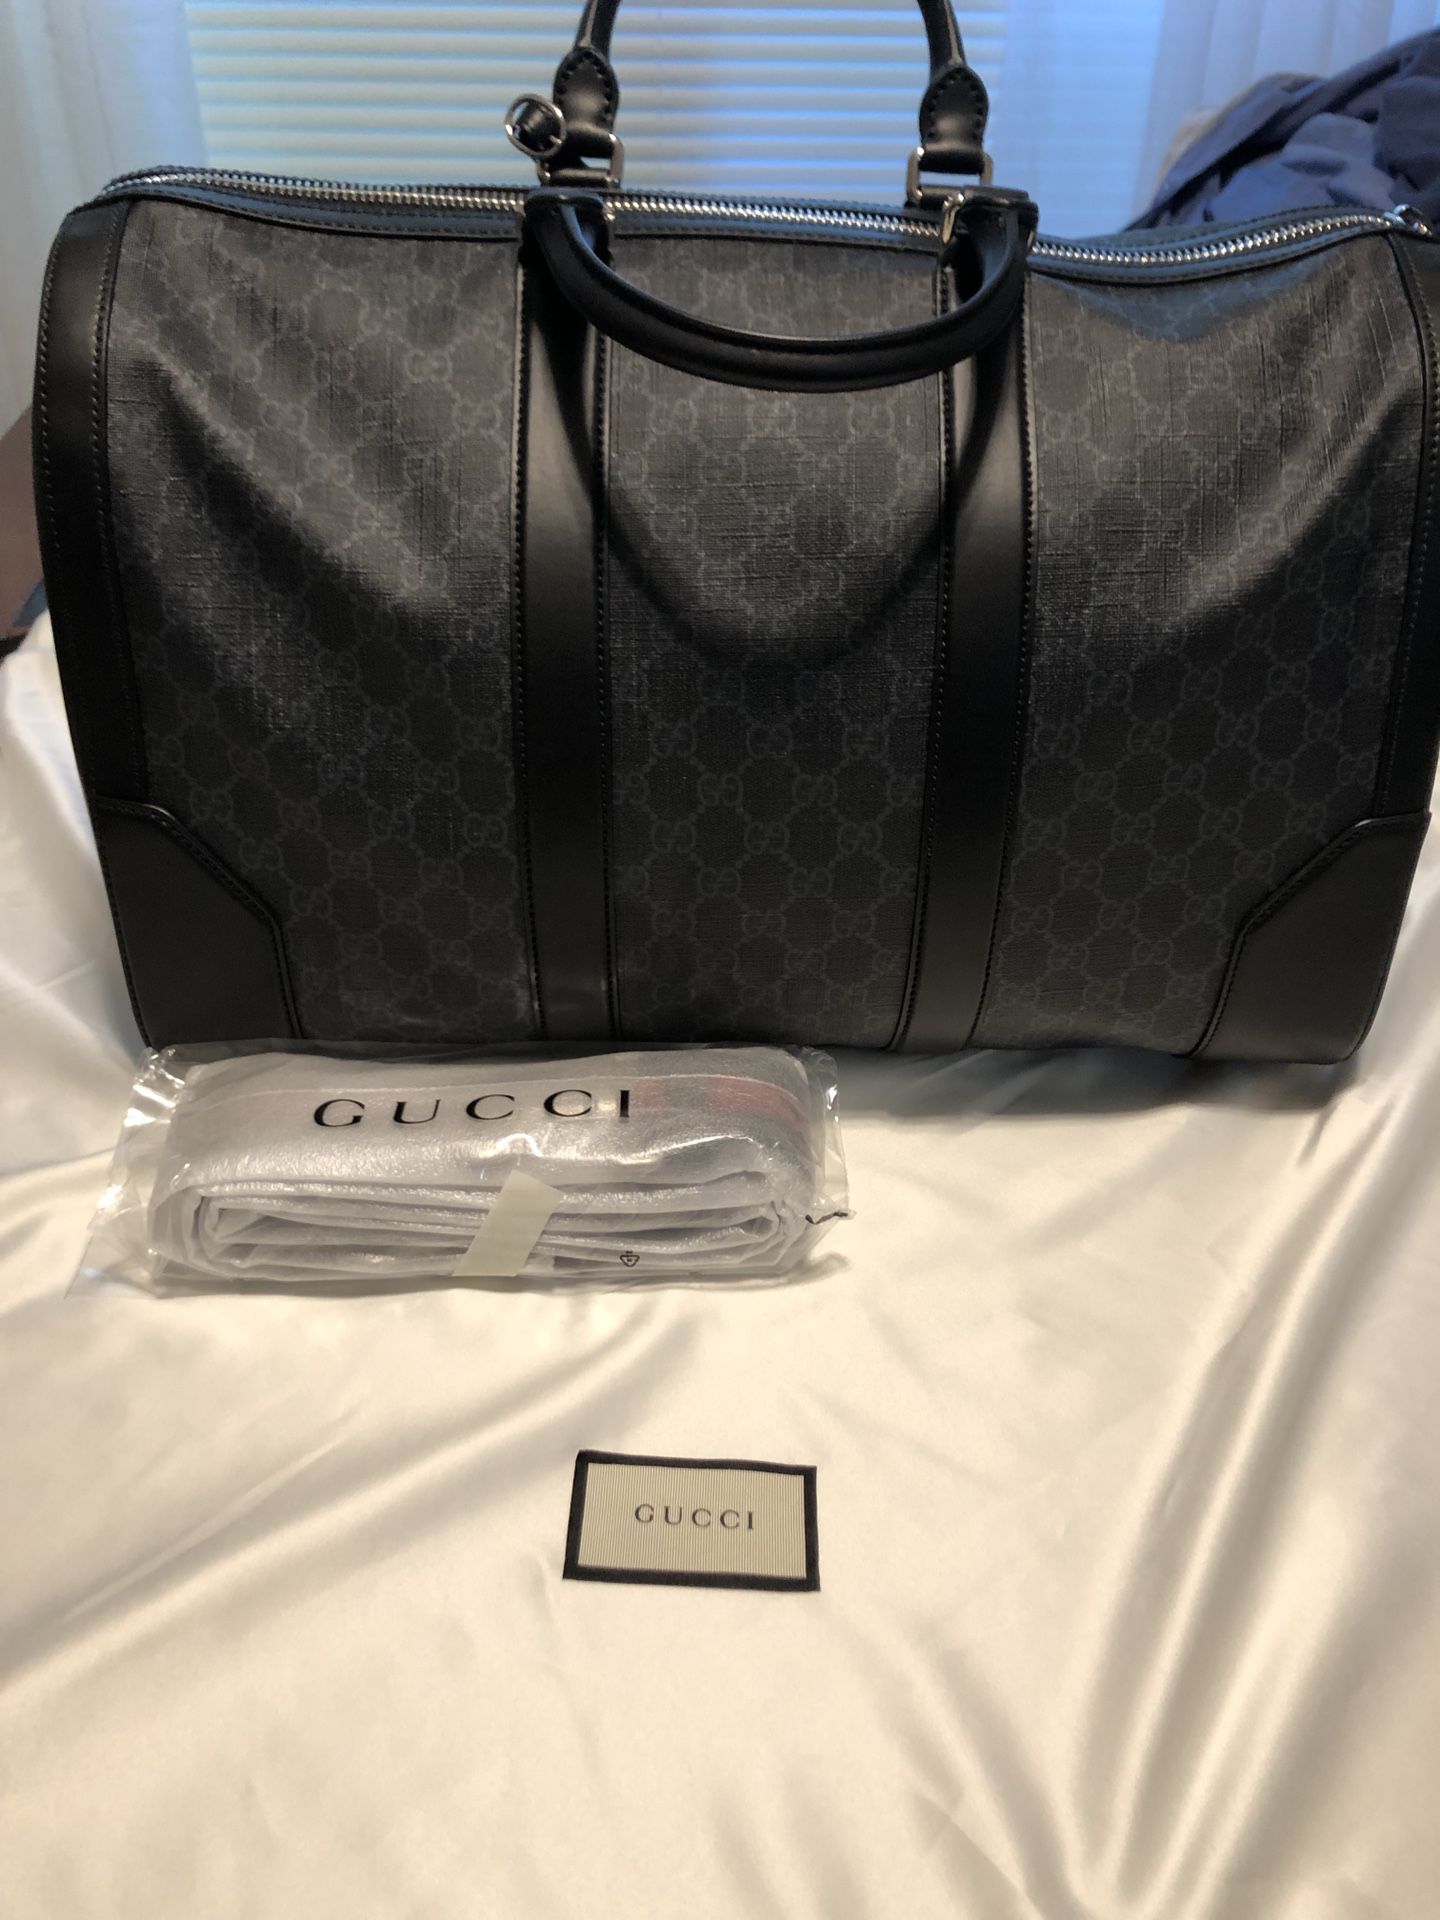 Gucci Supreme Duffle Bag